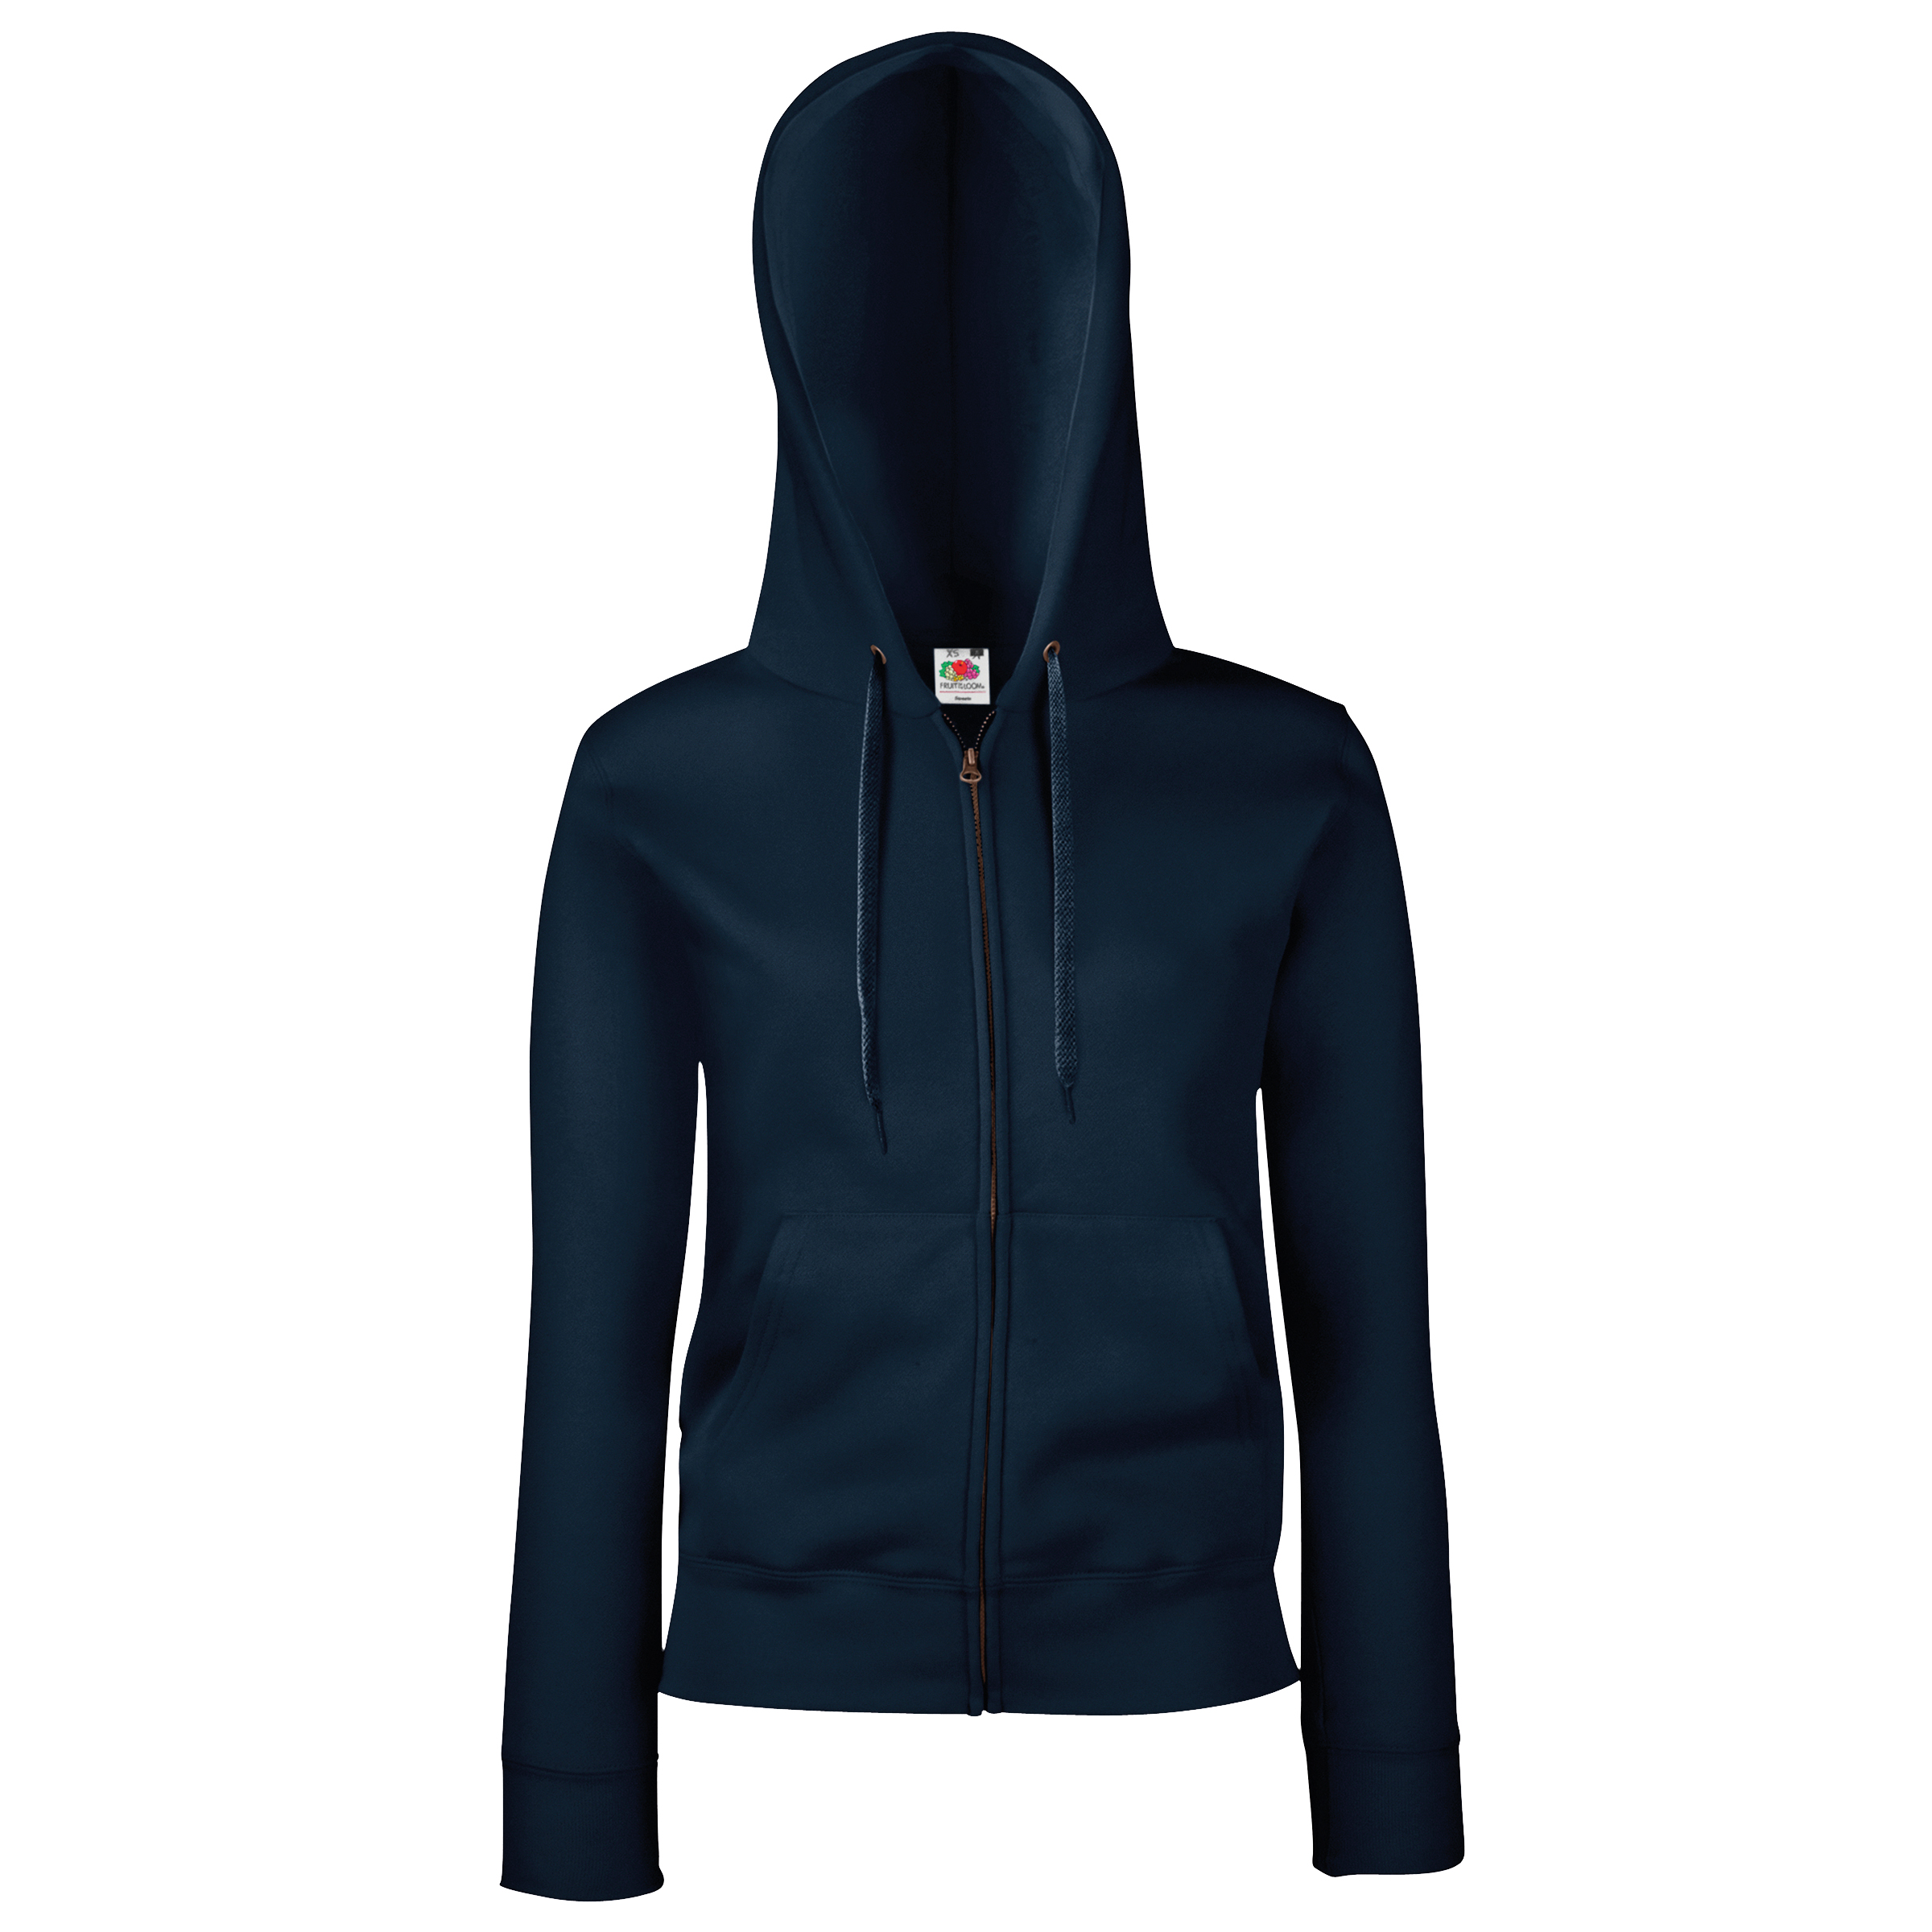 ax-httpswebsystems.s3.amazonaws.comtmp_for_downloadfruit-of-the-loom-womens-premium-70-30-hooded-sweatshirt-jacket-deep-navy.jpeg